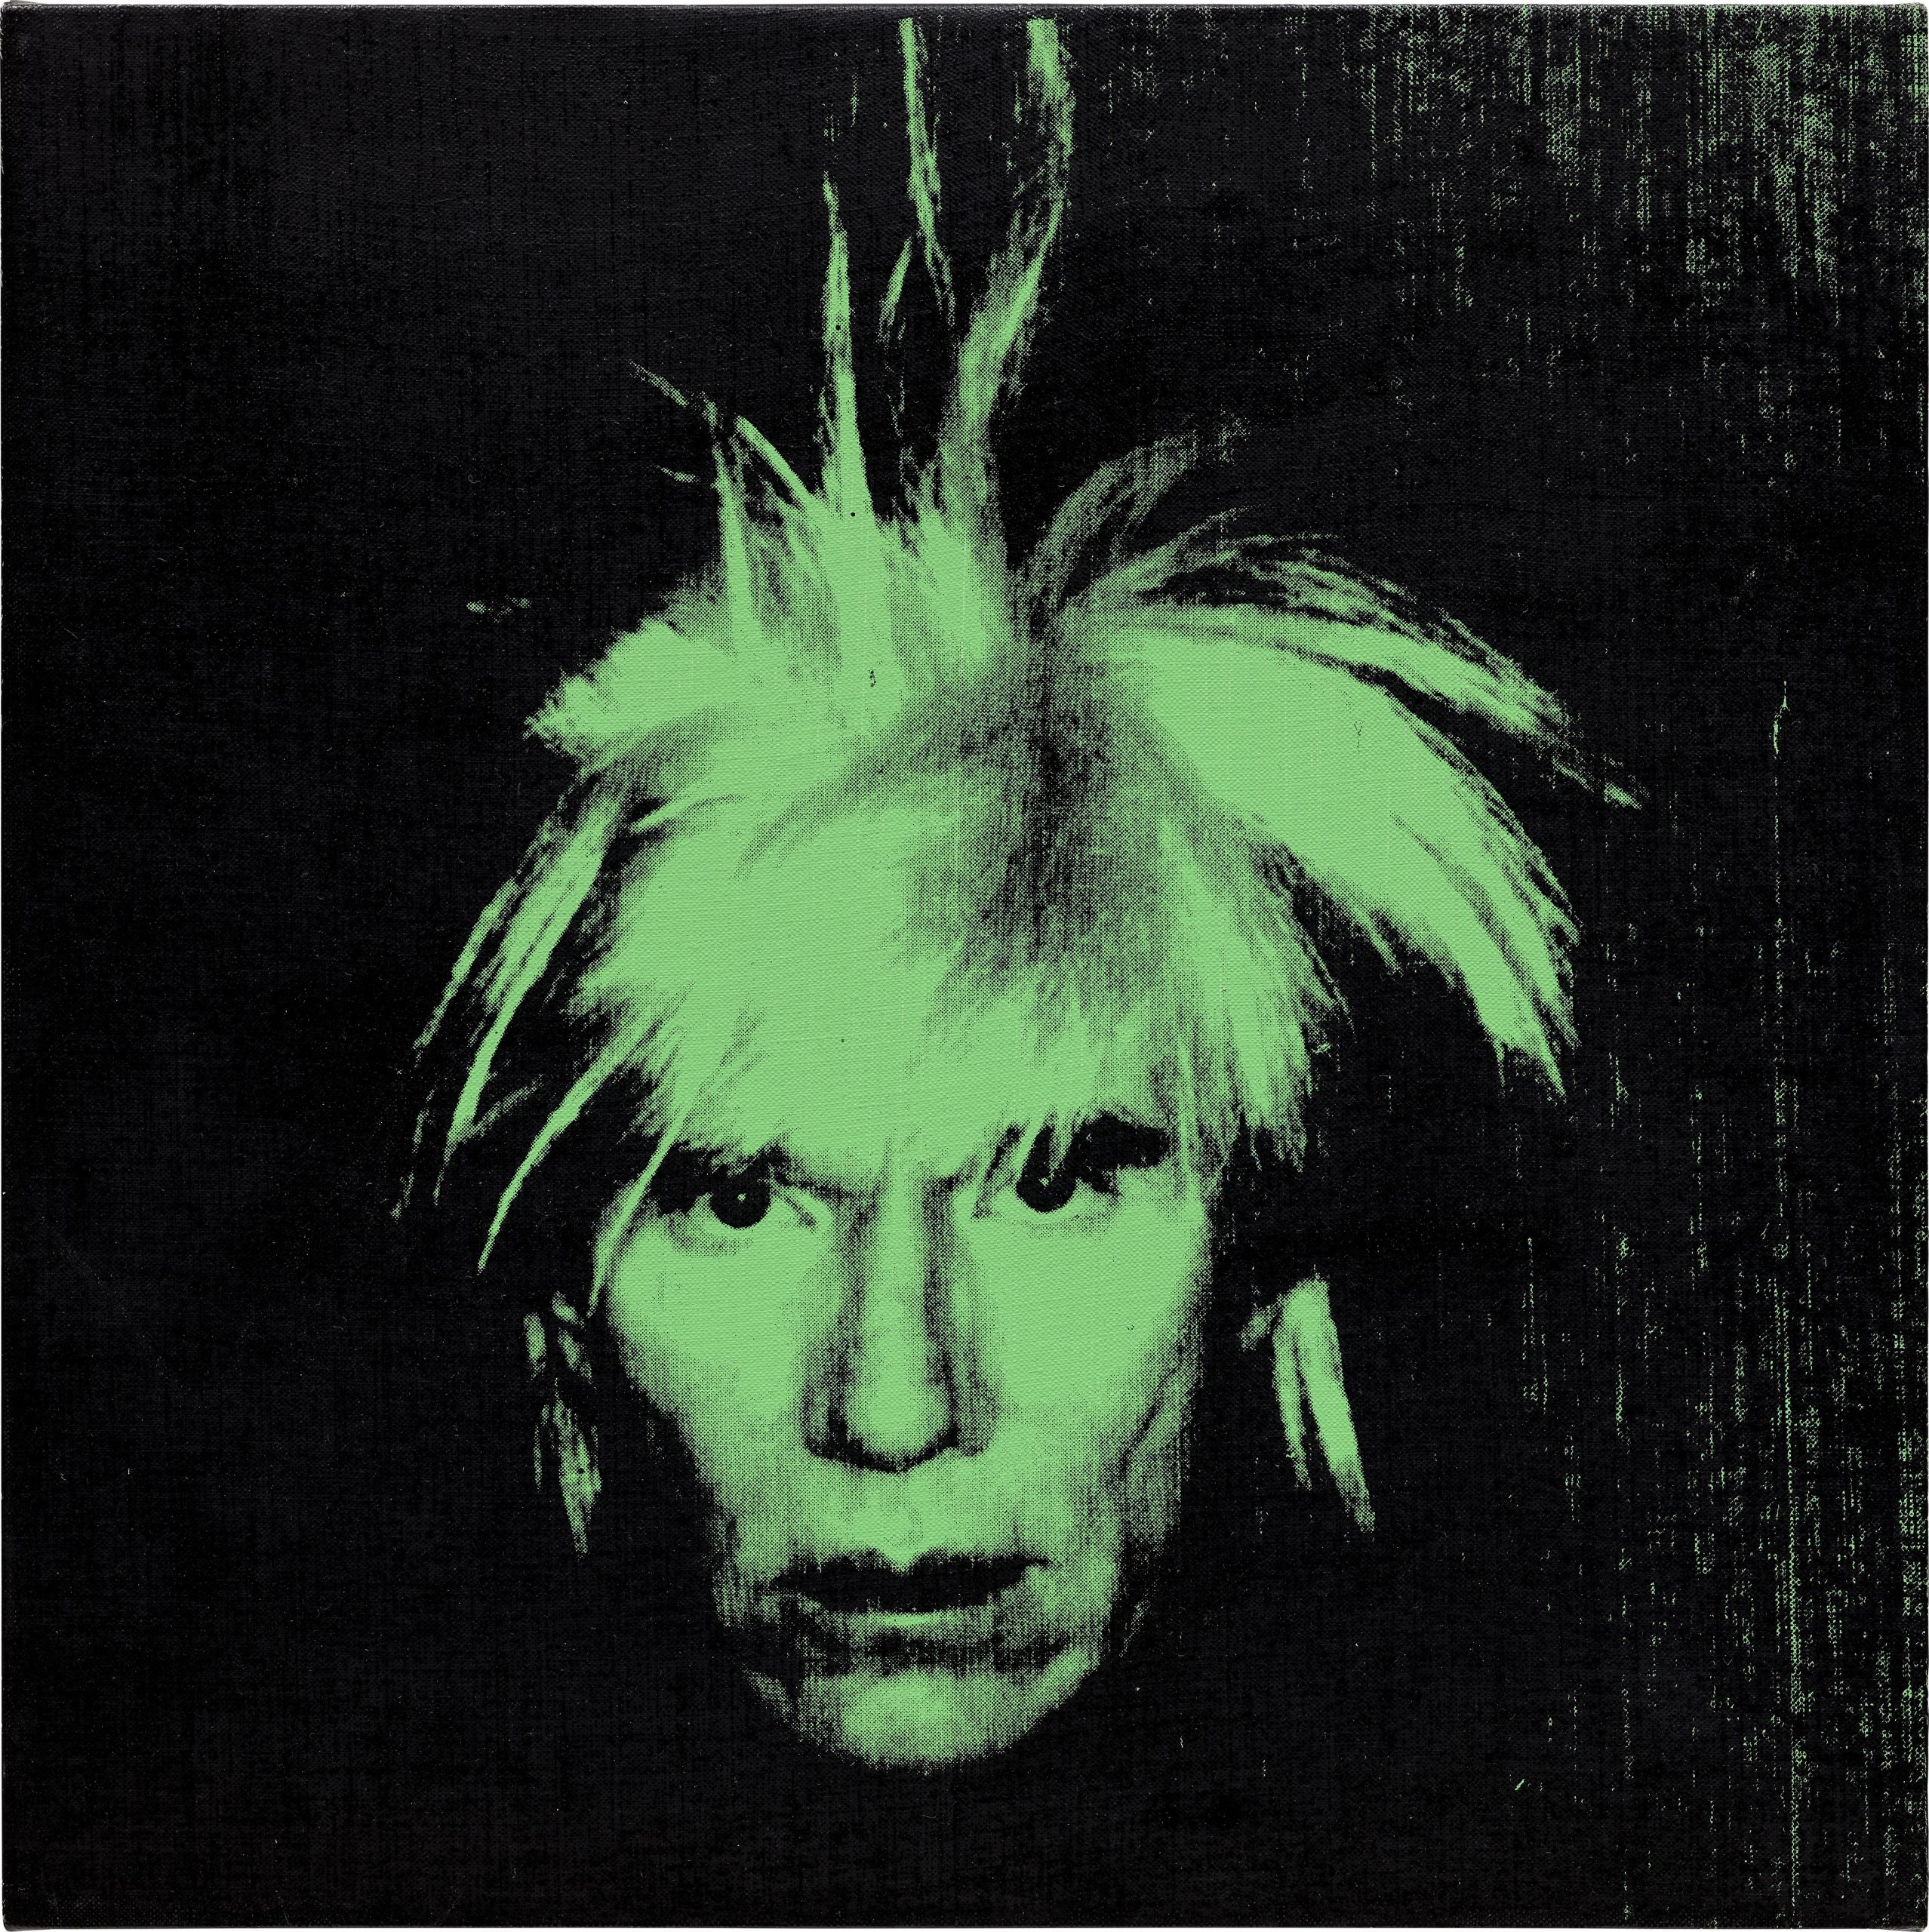 Remembering Legendary Artist Andy Warhol | museosdelima.com